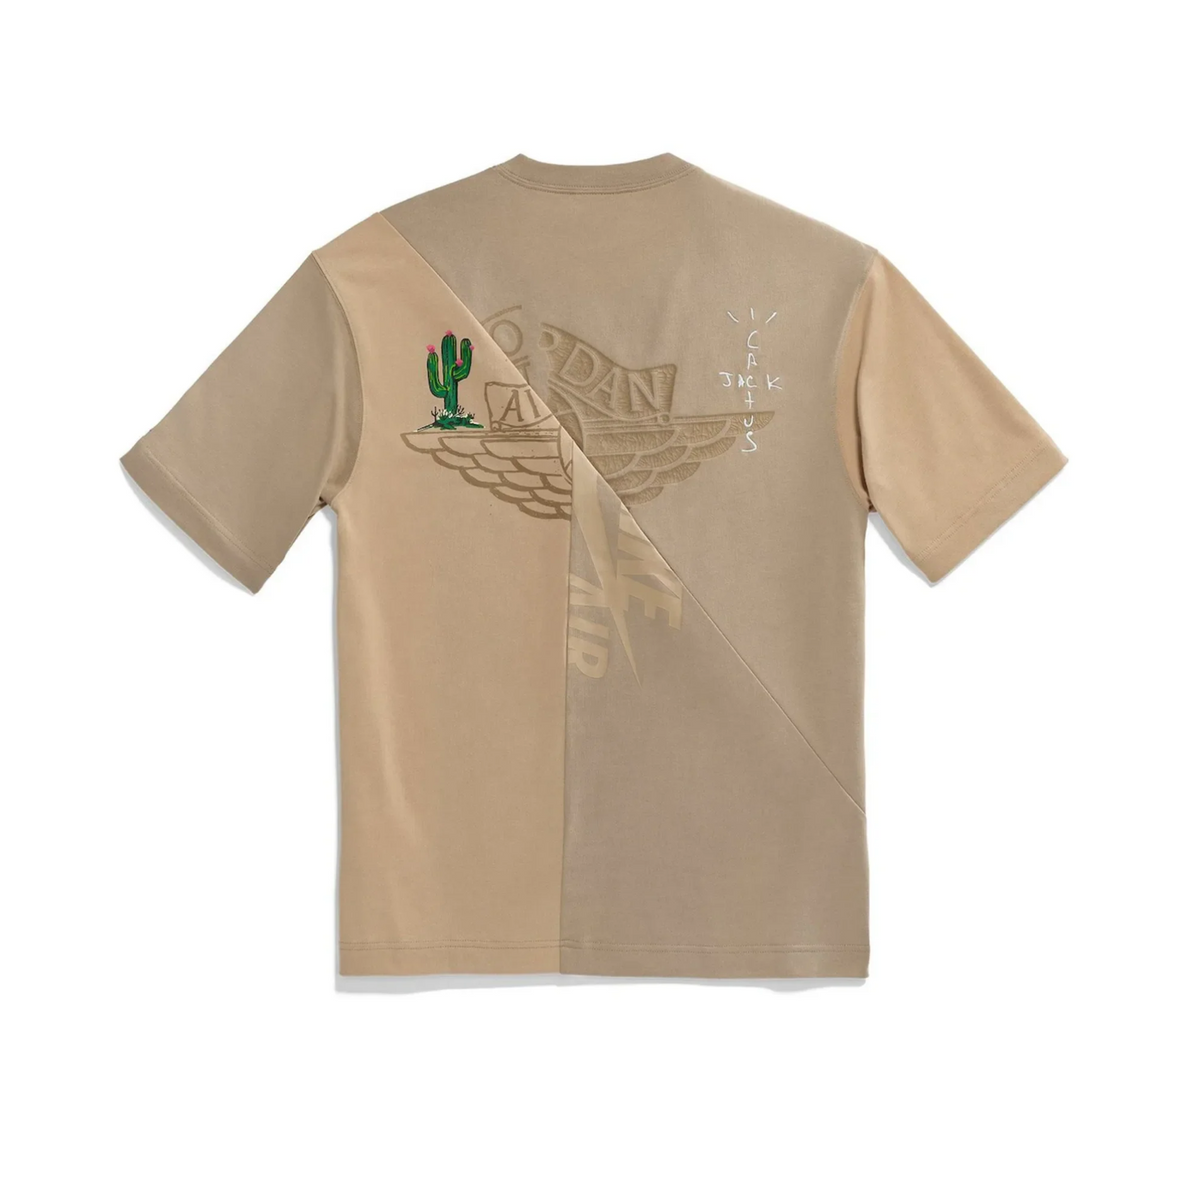 Travis Scott Cactus Jack x Nike Air Jordan T-shirt "Khaki/Desert"